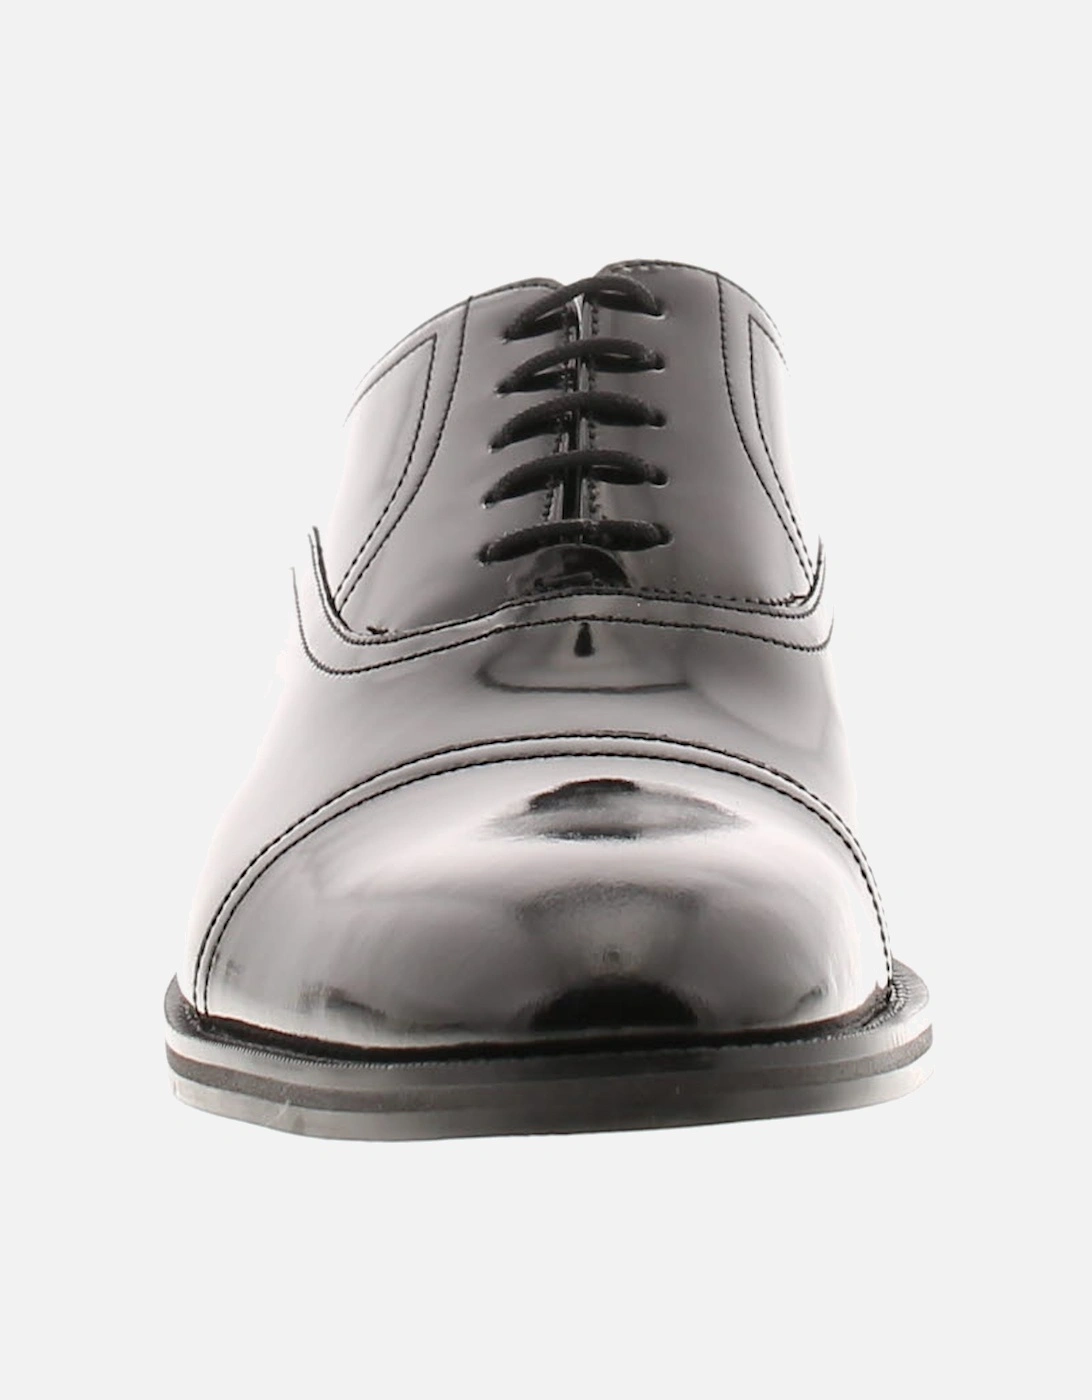 Mens Shoes Lace Up Carlenp Oxford Derby Smart Leather Black UK Size